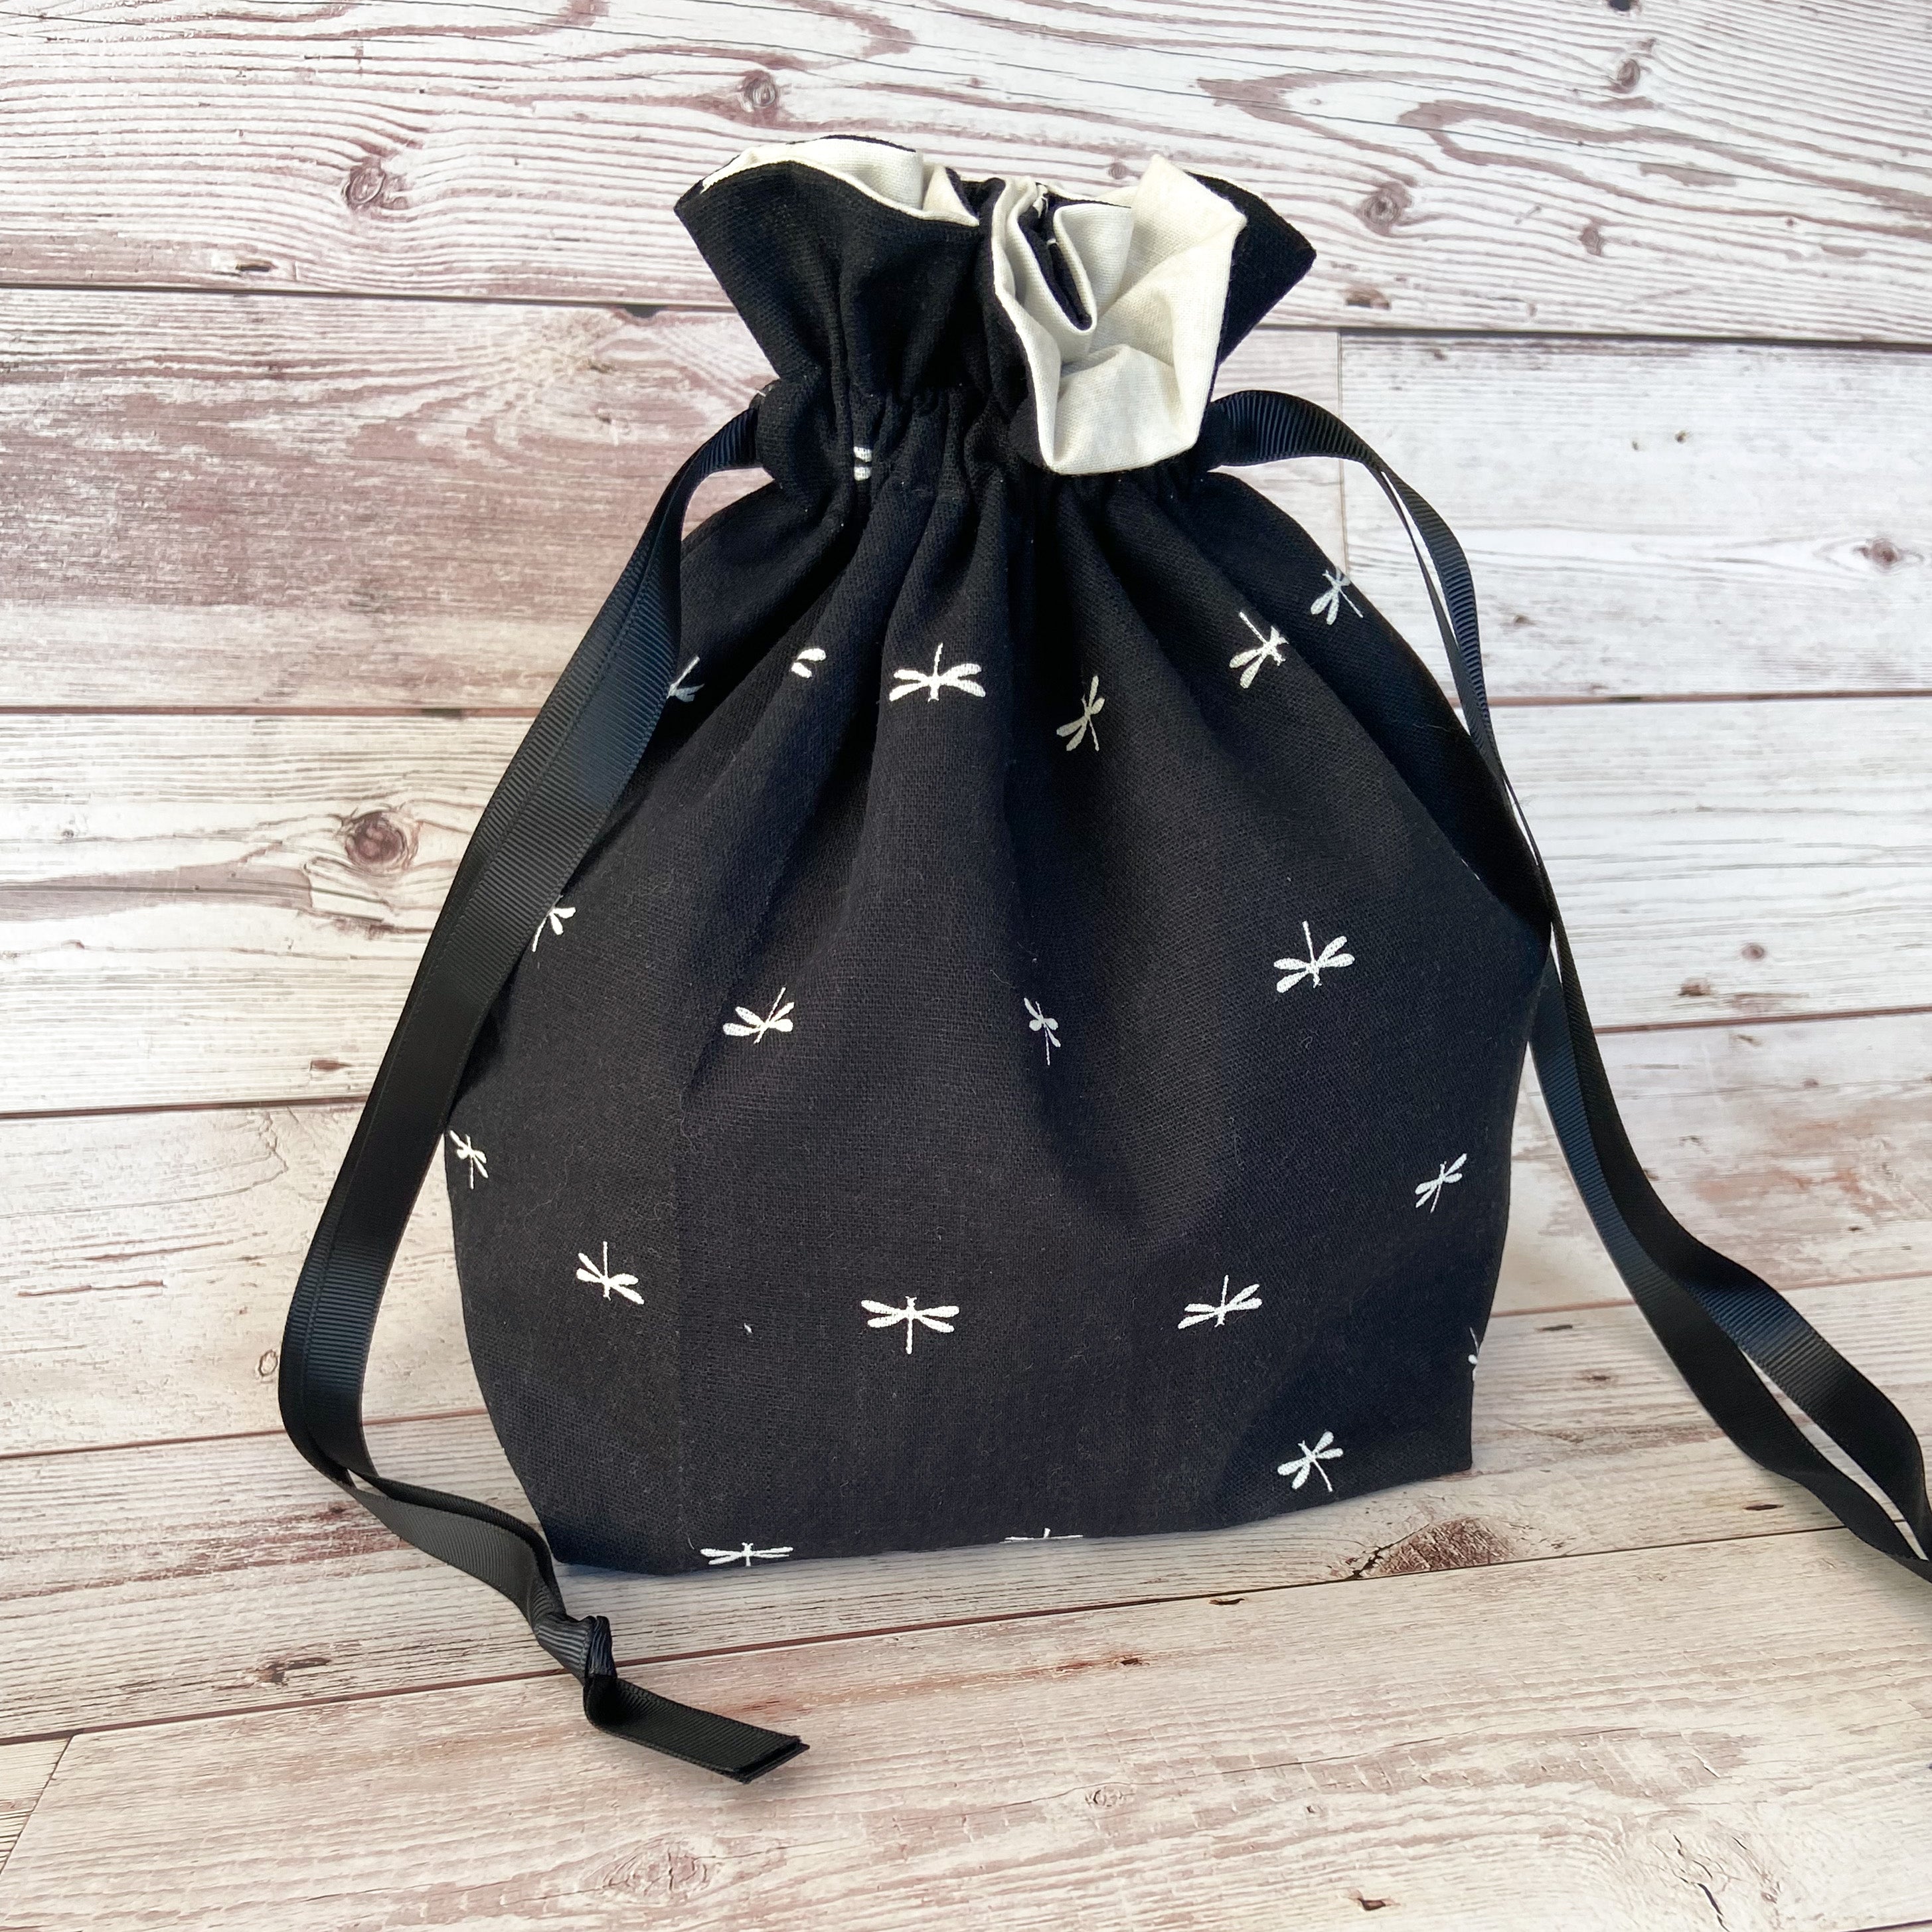 Small Drawstring Bag - Black with Cream Dragonflies